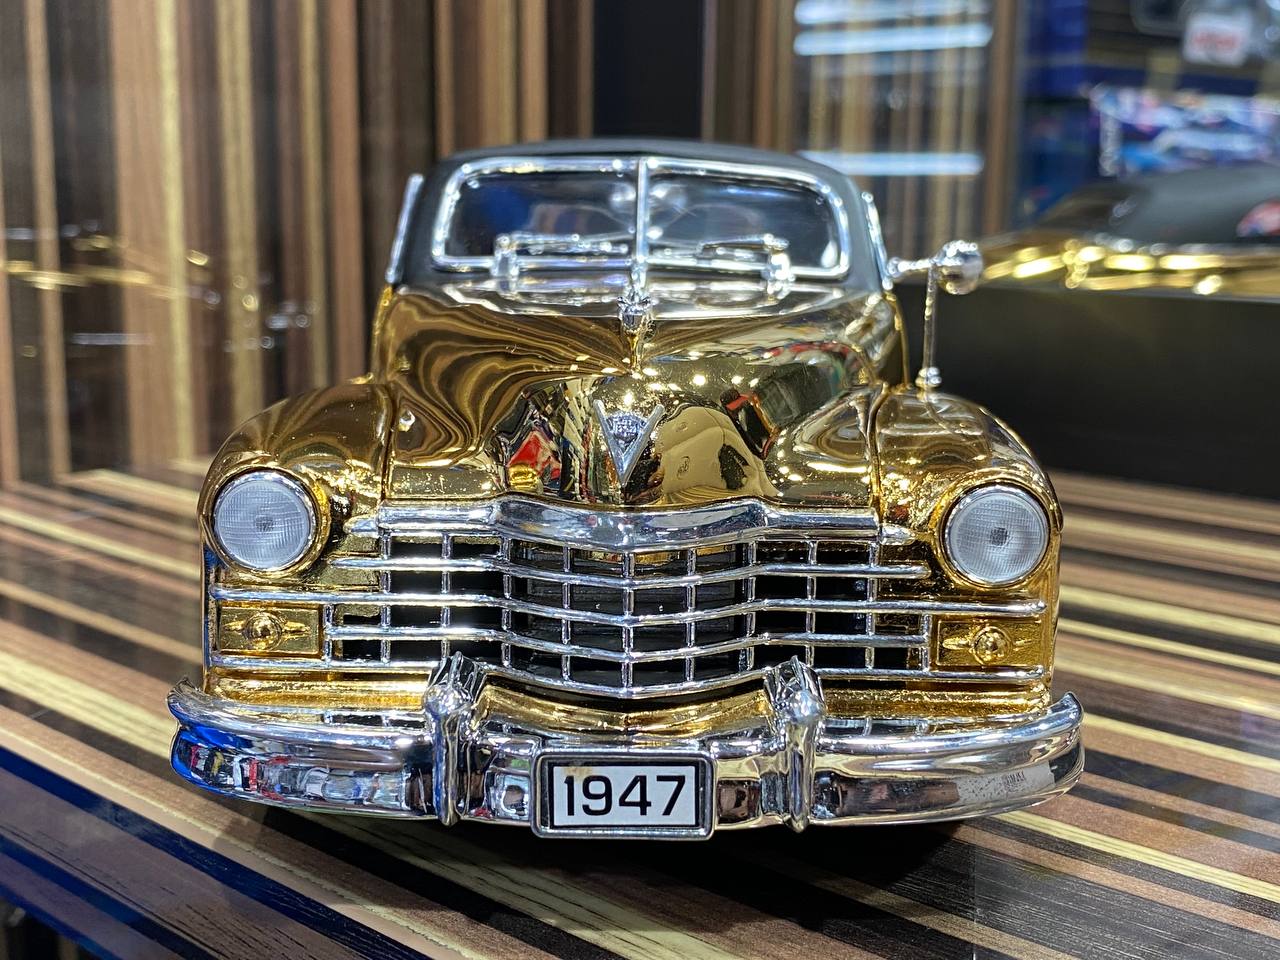 1/18 Diecast Miniature Cadillac 47 Series 62 Anson Gold Scale Model Car